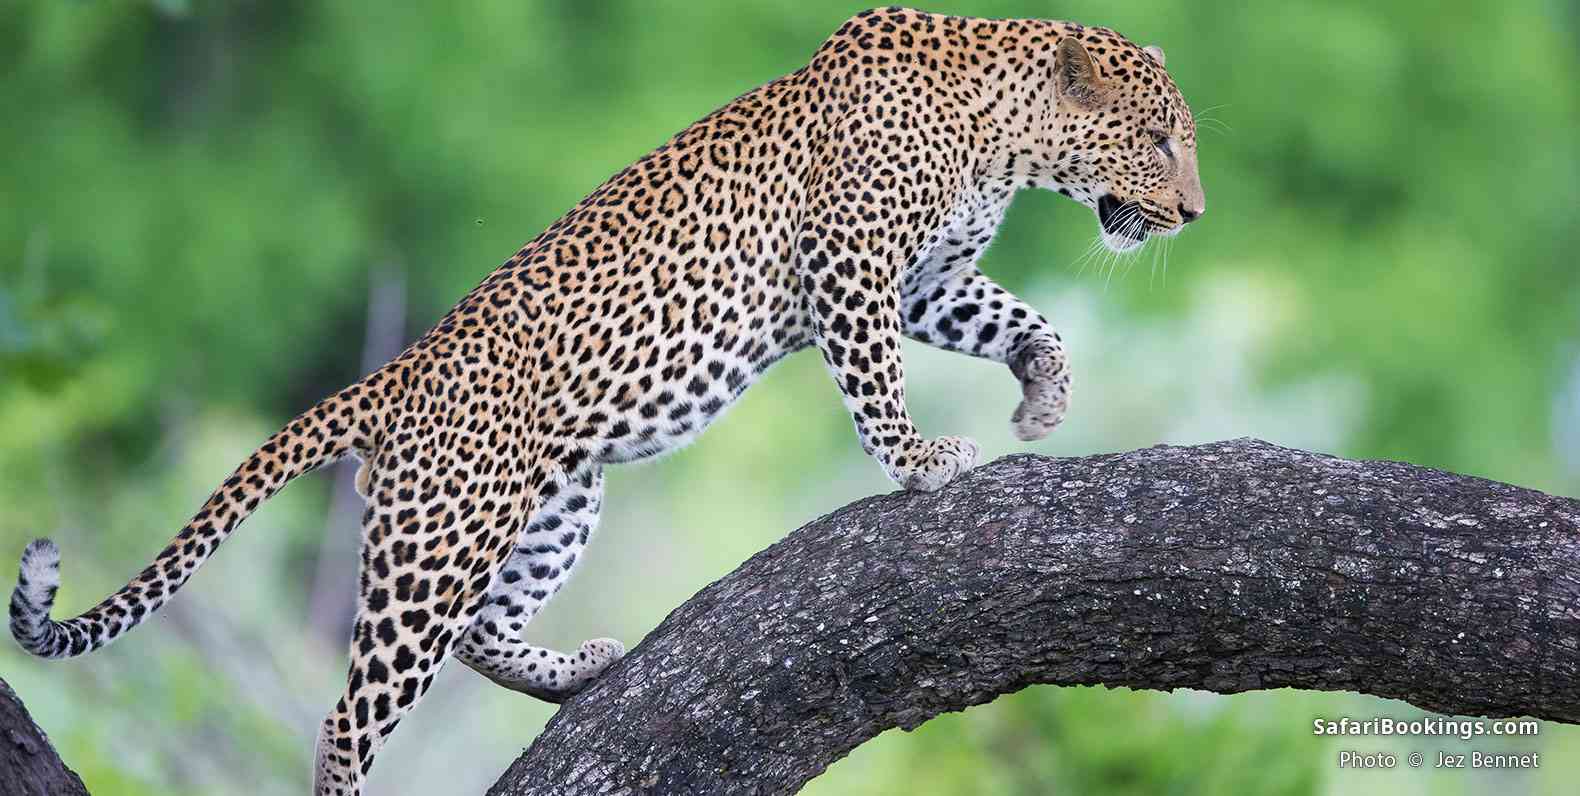 Leopard climbing a tree